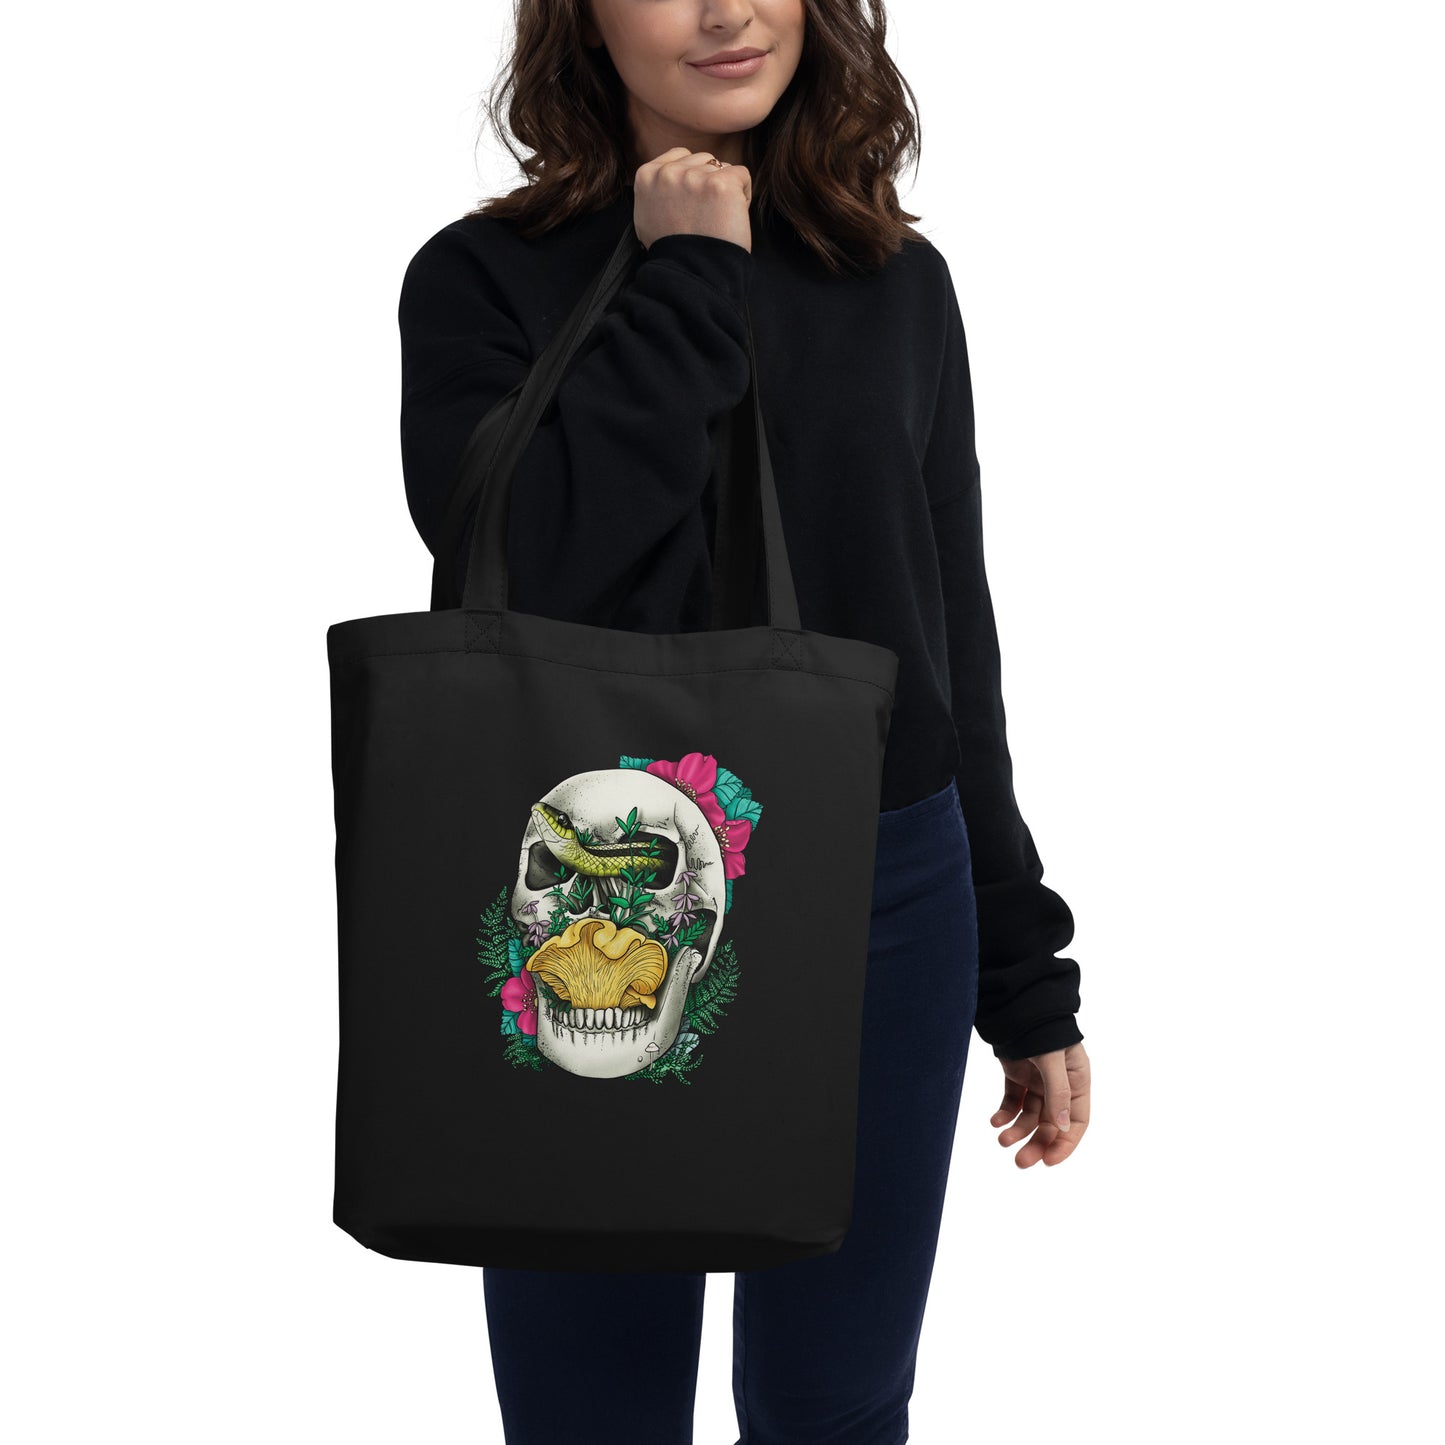 Skull, Snake and Chanterelle Mushroom | Eco-Friendly Tote Bag